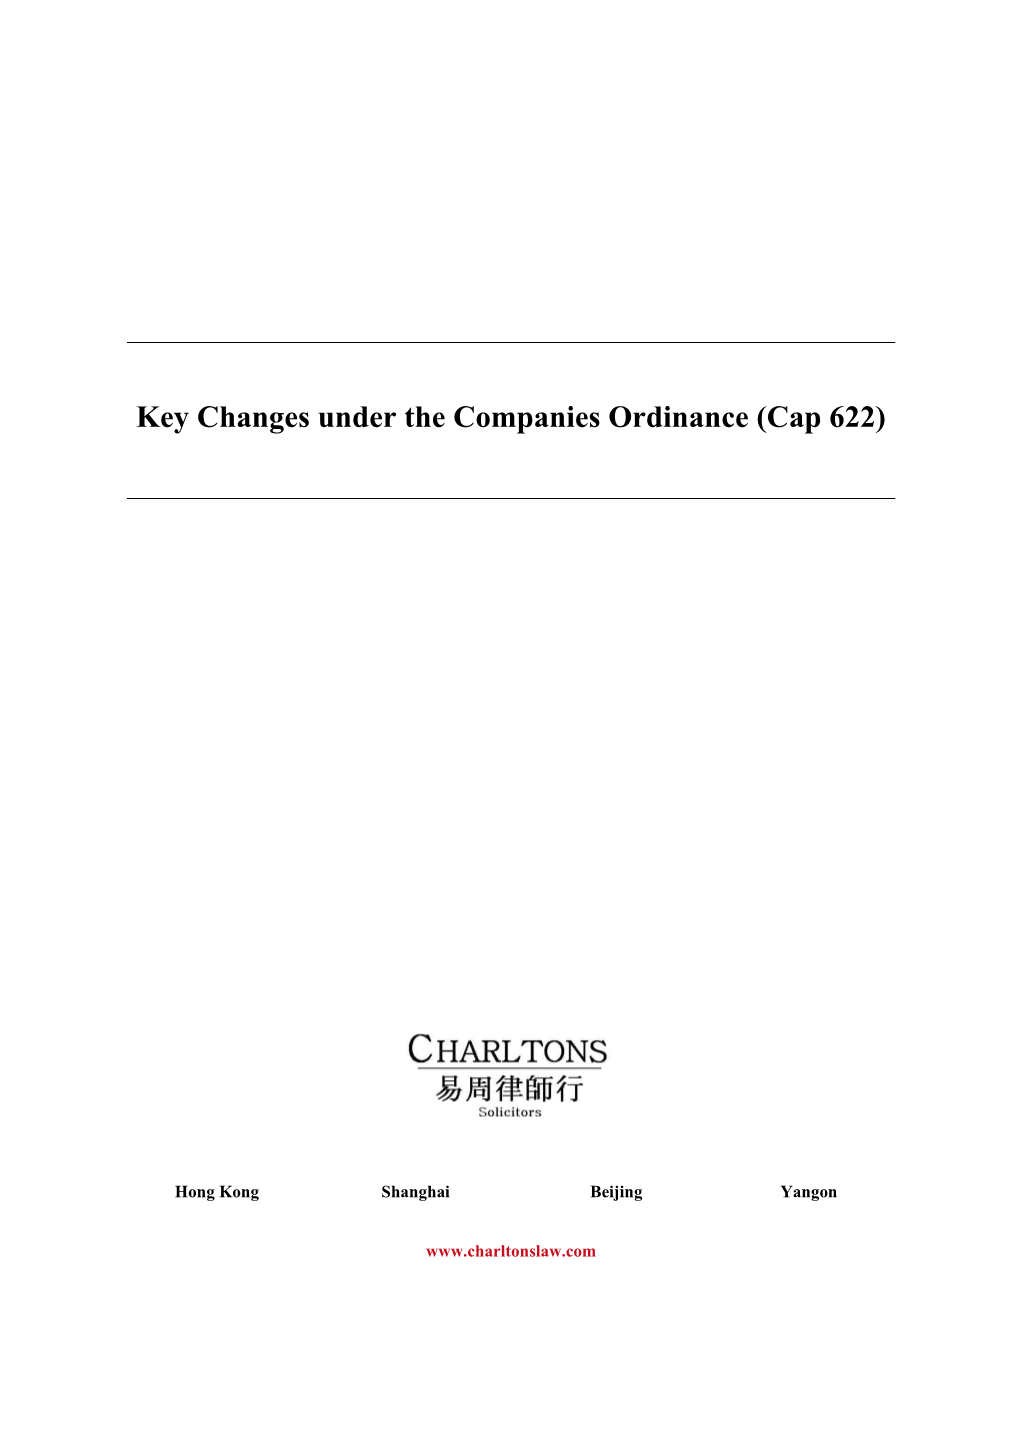 Key Changes Under the Companies Ordinance (Cap 622)